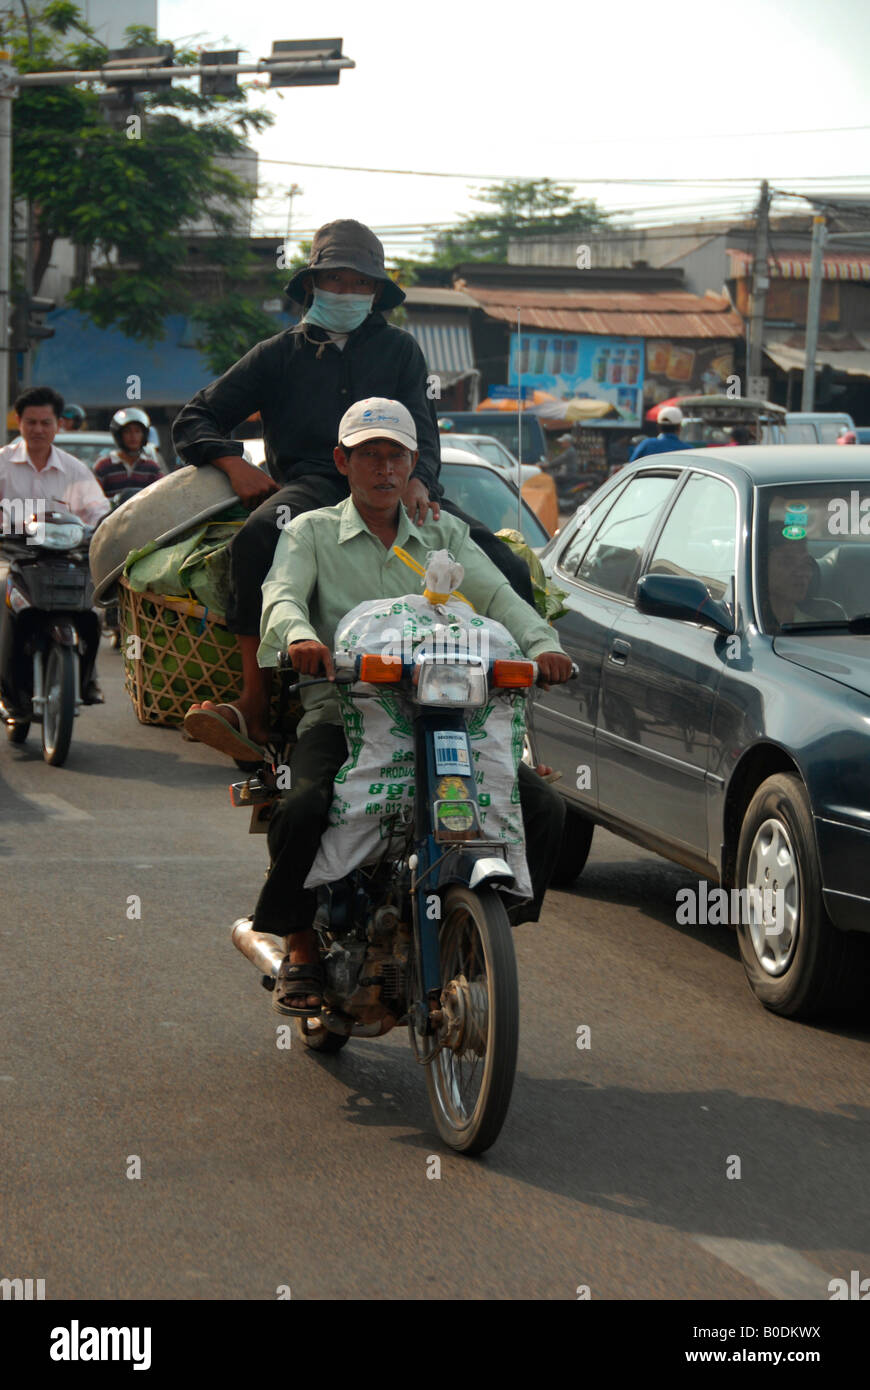 people on the street, riding overloaded motorbikes,   phnom penh, cambodia Stock Photo